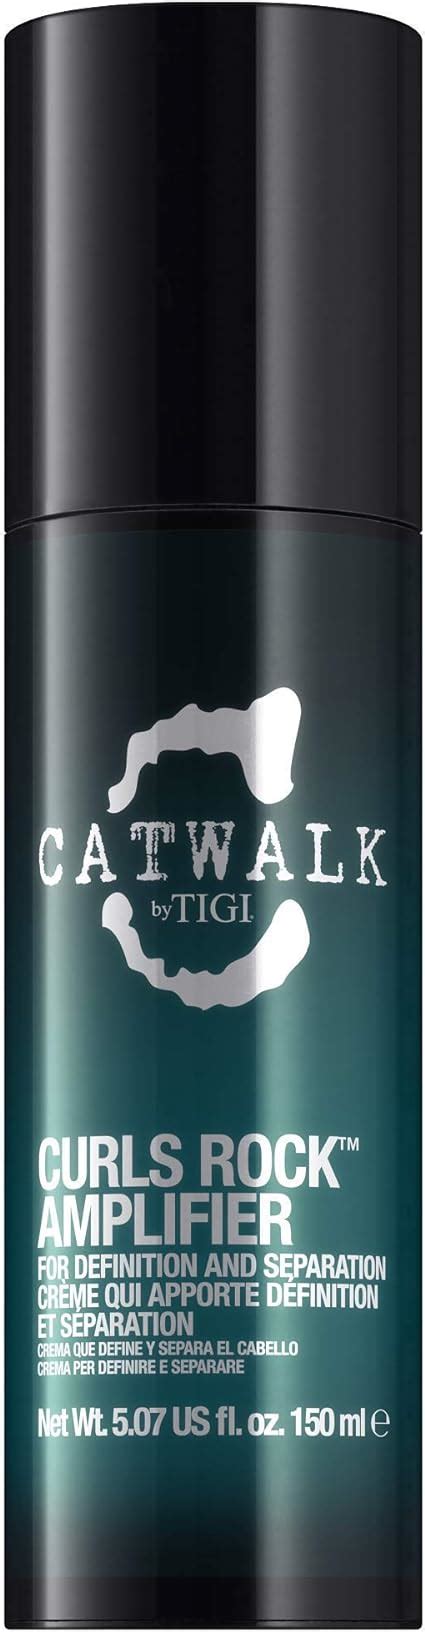 Catwalk By Tigi Curls Rock Amplifier Curly Hair Cream For Enhanced